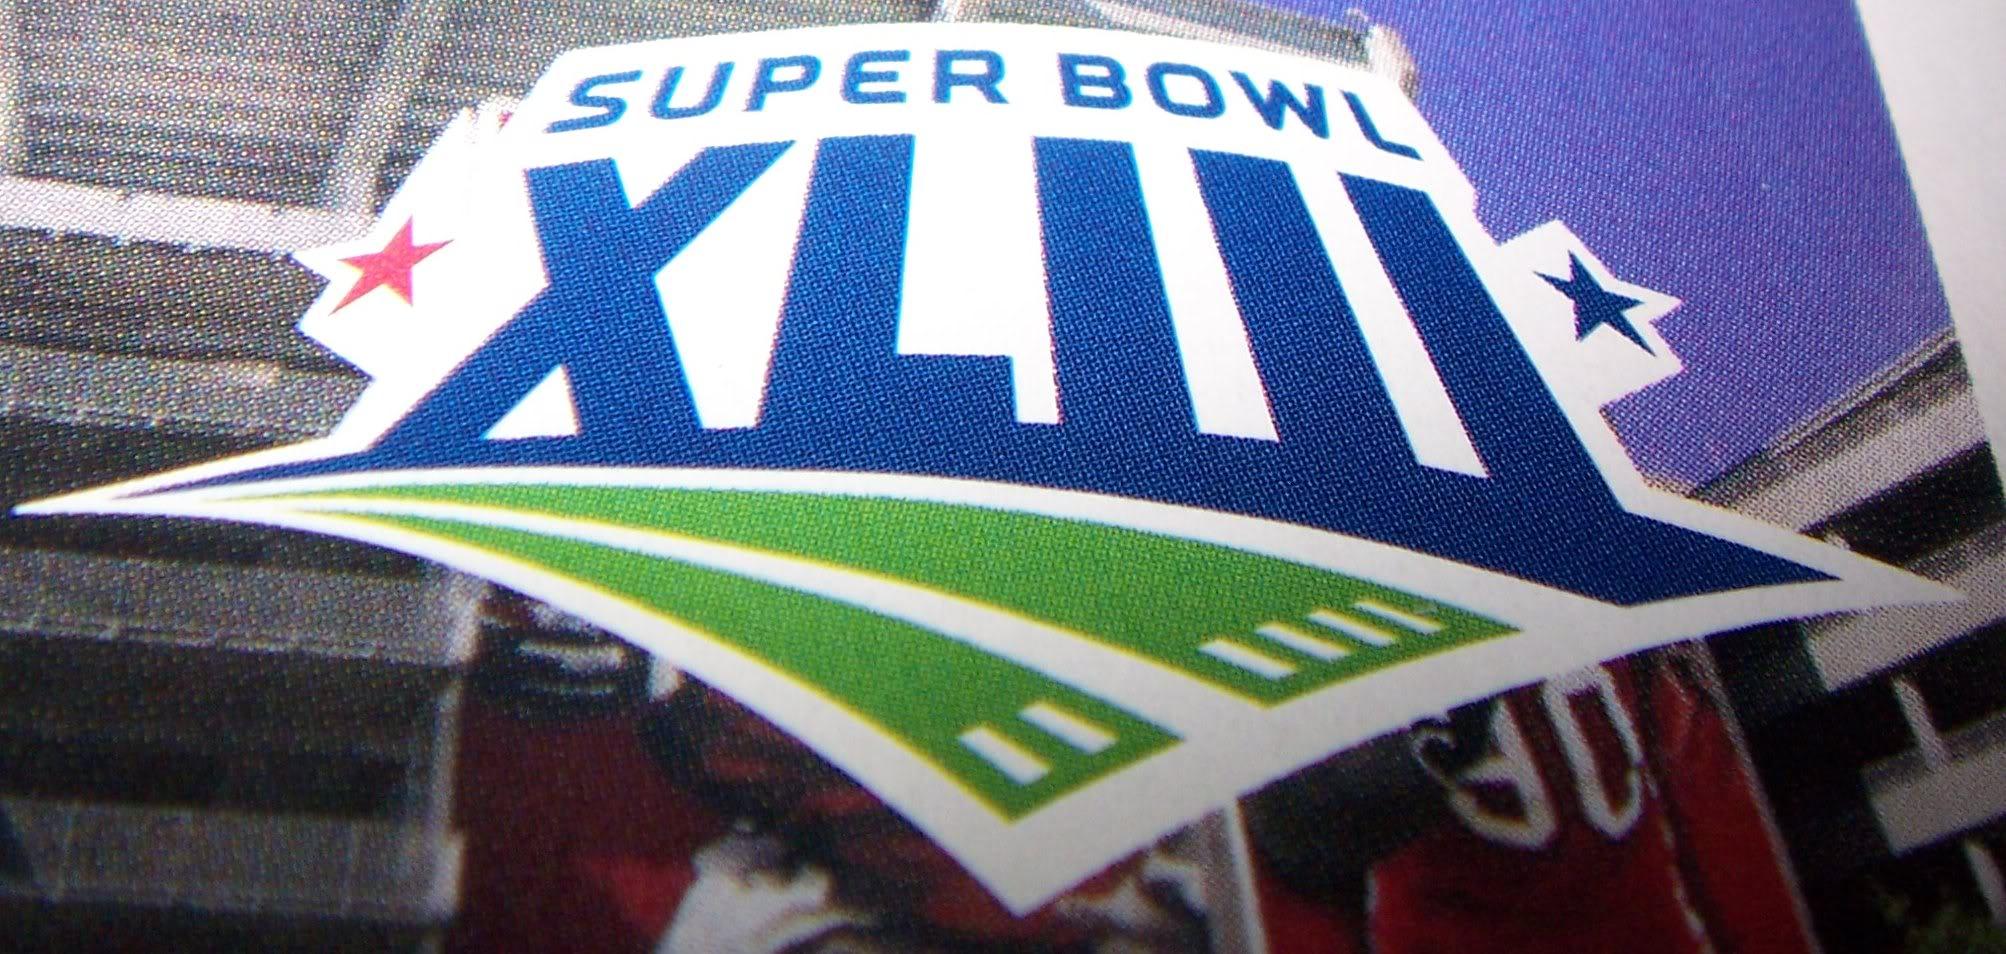 XLIII Logo - Super Bowl XLIII Logo - Sports Logos - Chris Creamer's Sports Logos ...